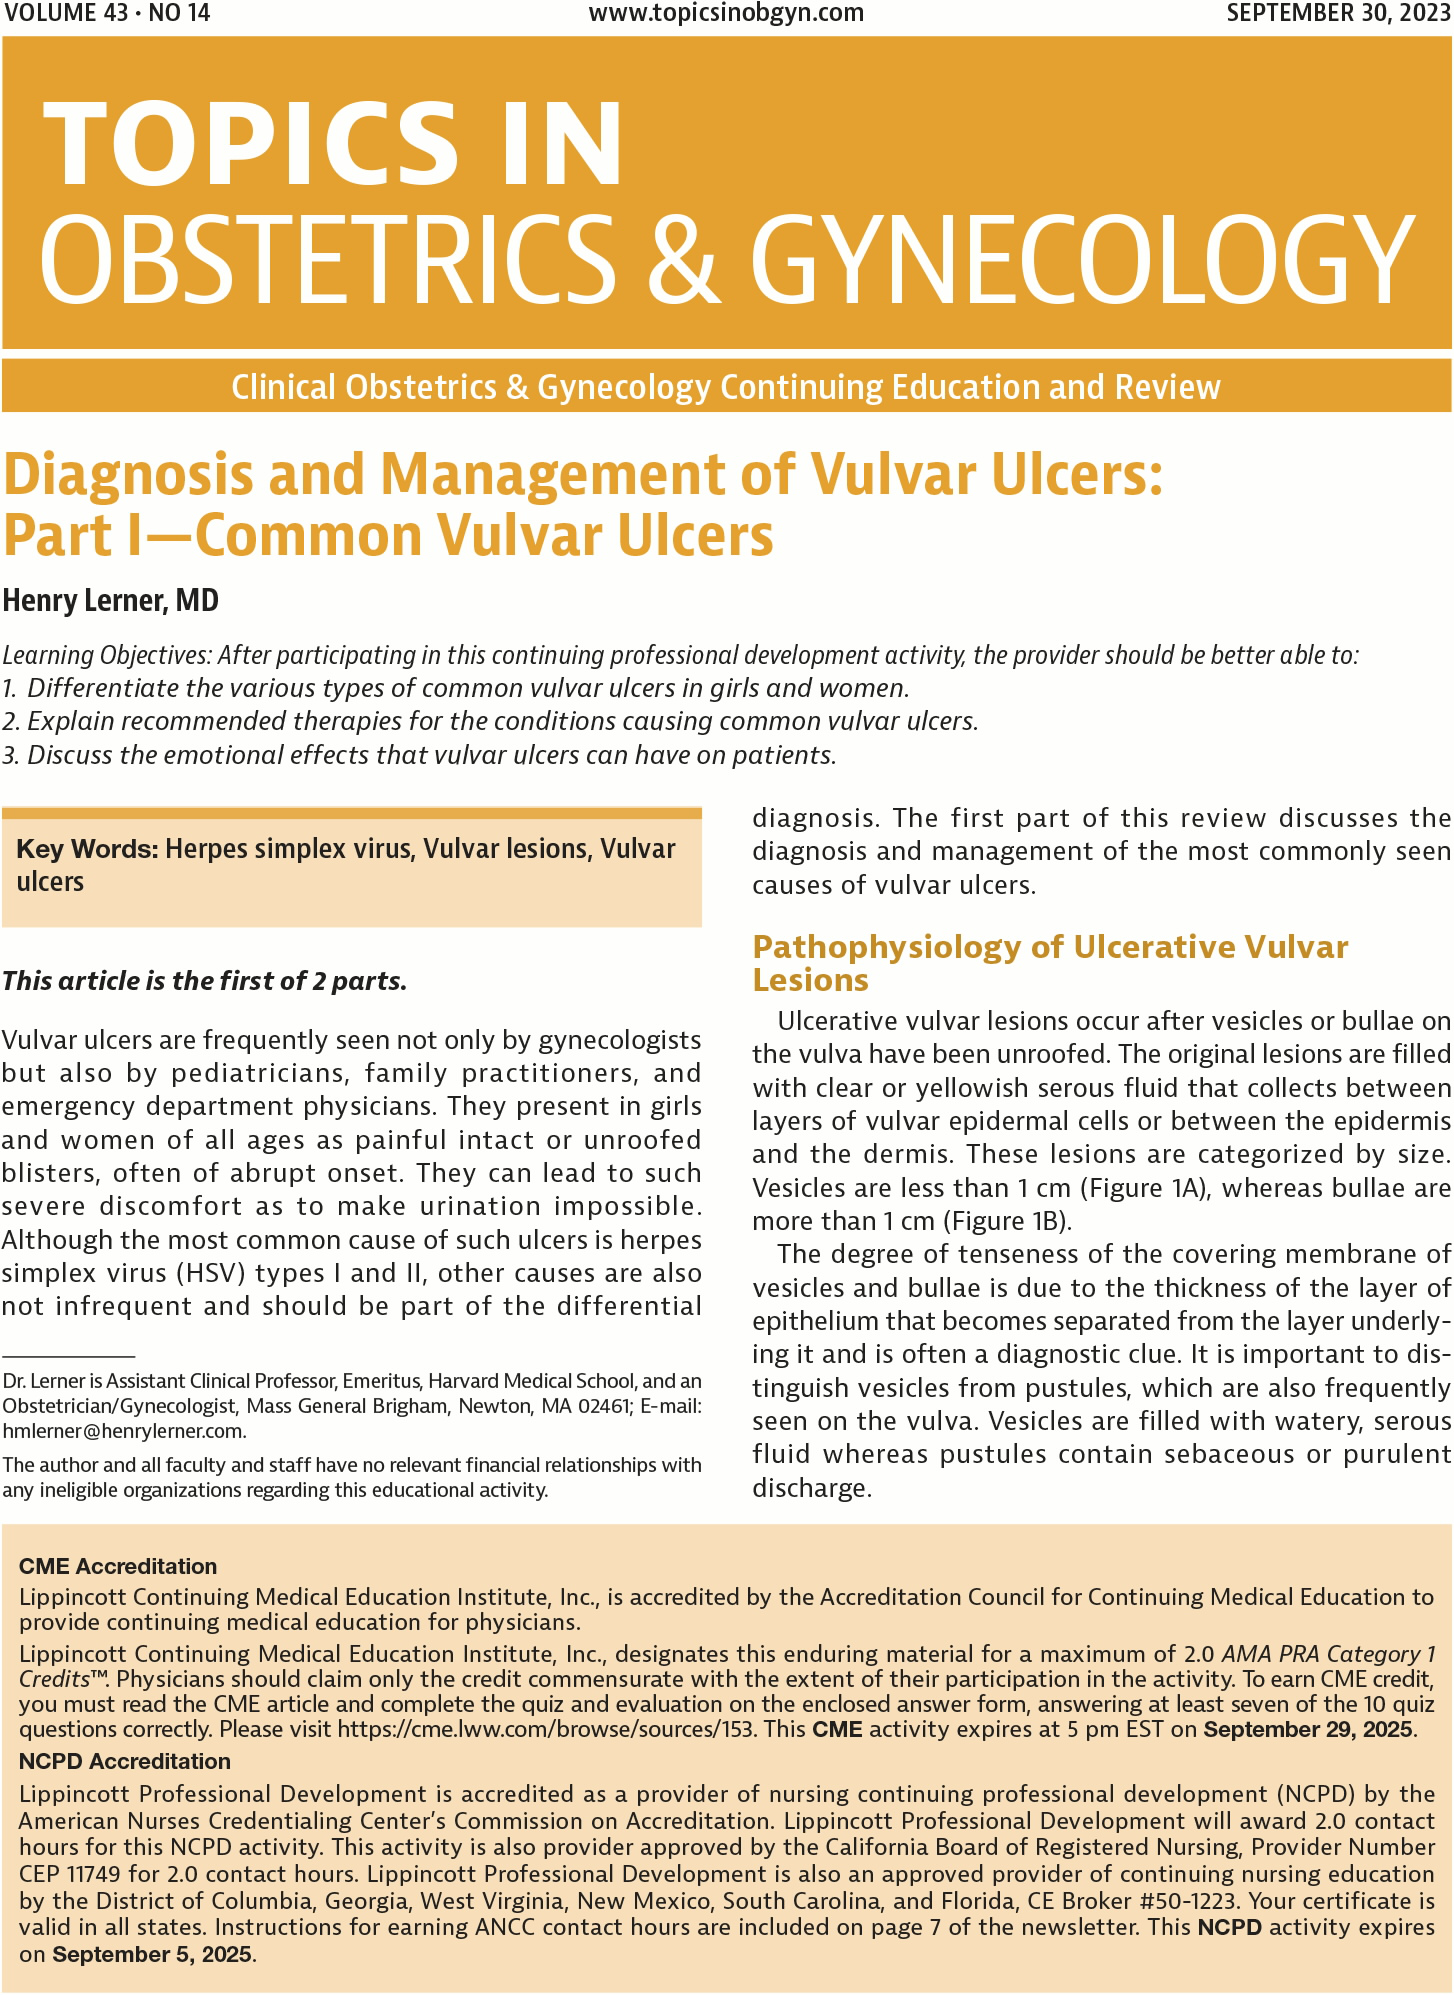 Topics in Obstetrics & Gynecology